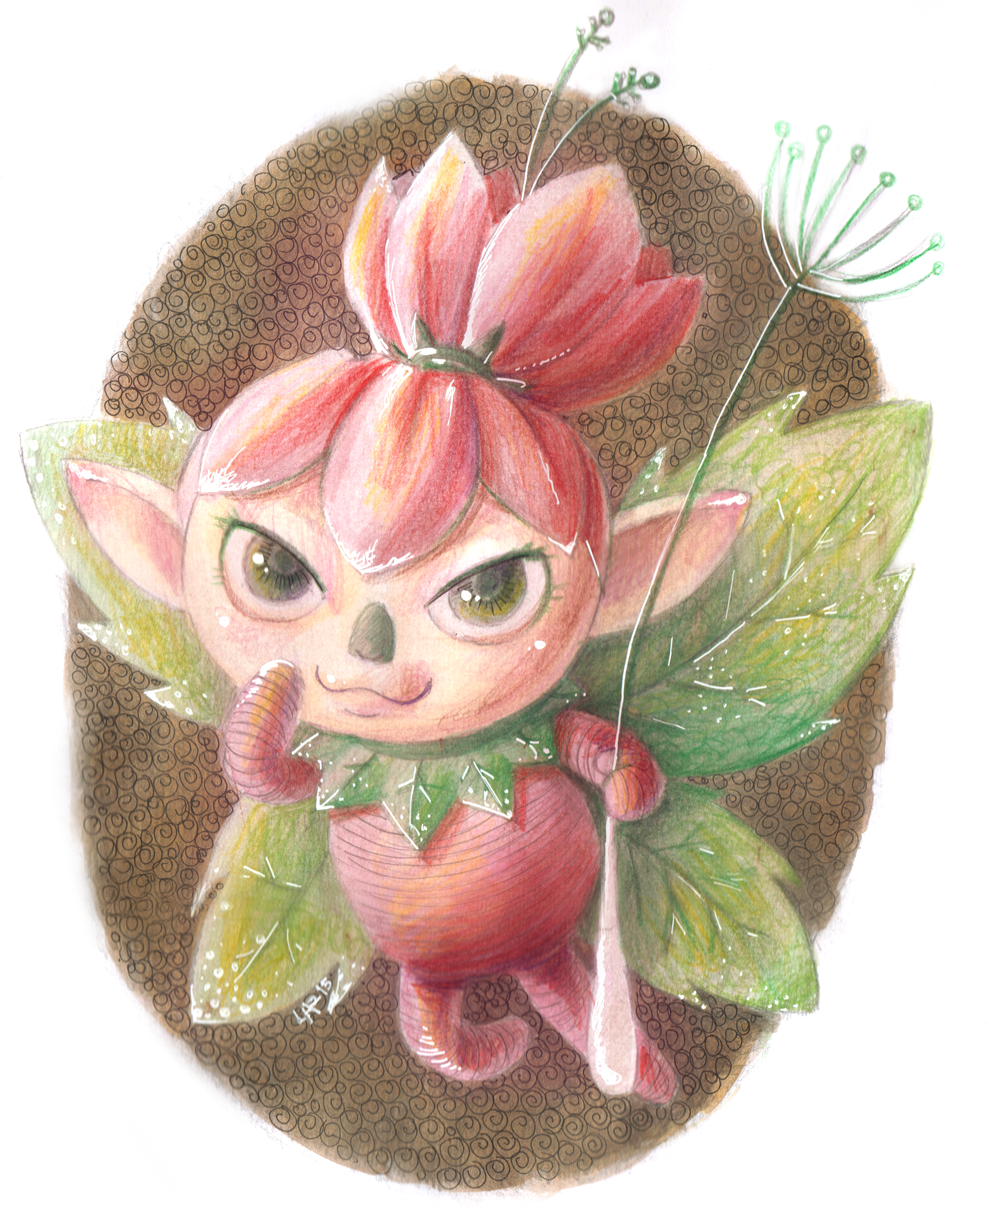 beet vegetables vegetal fairy Fairies fantasy children books watercolor color pencil handmade